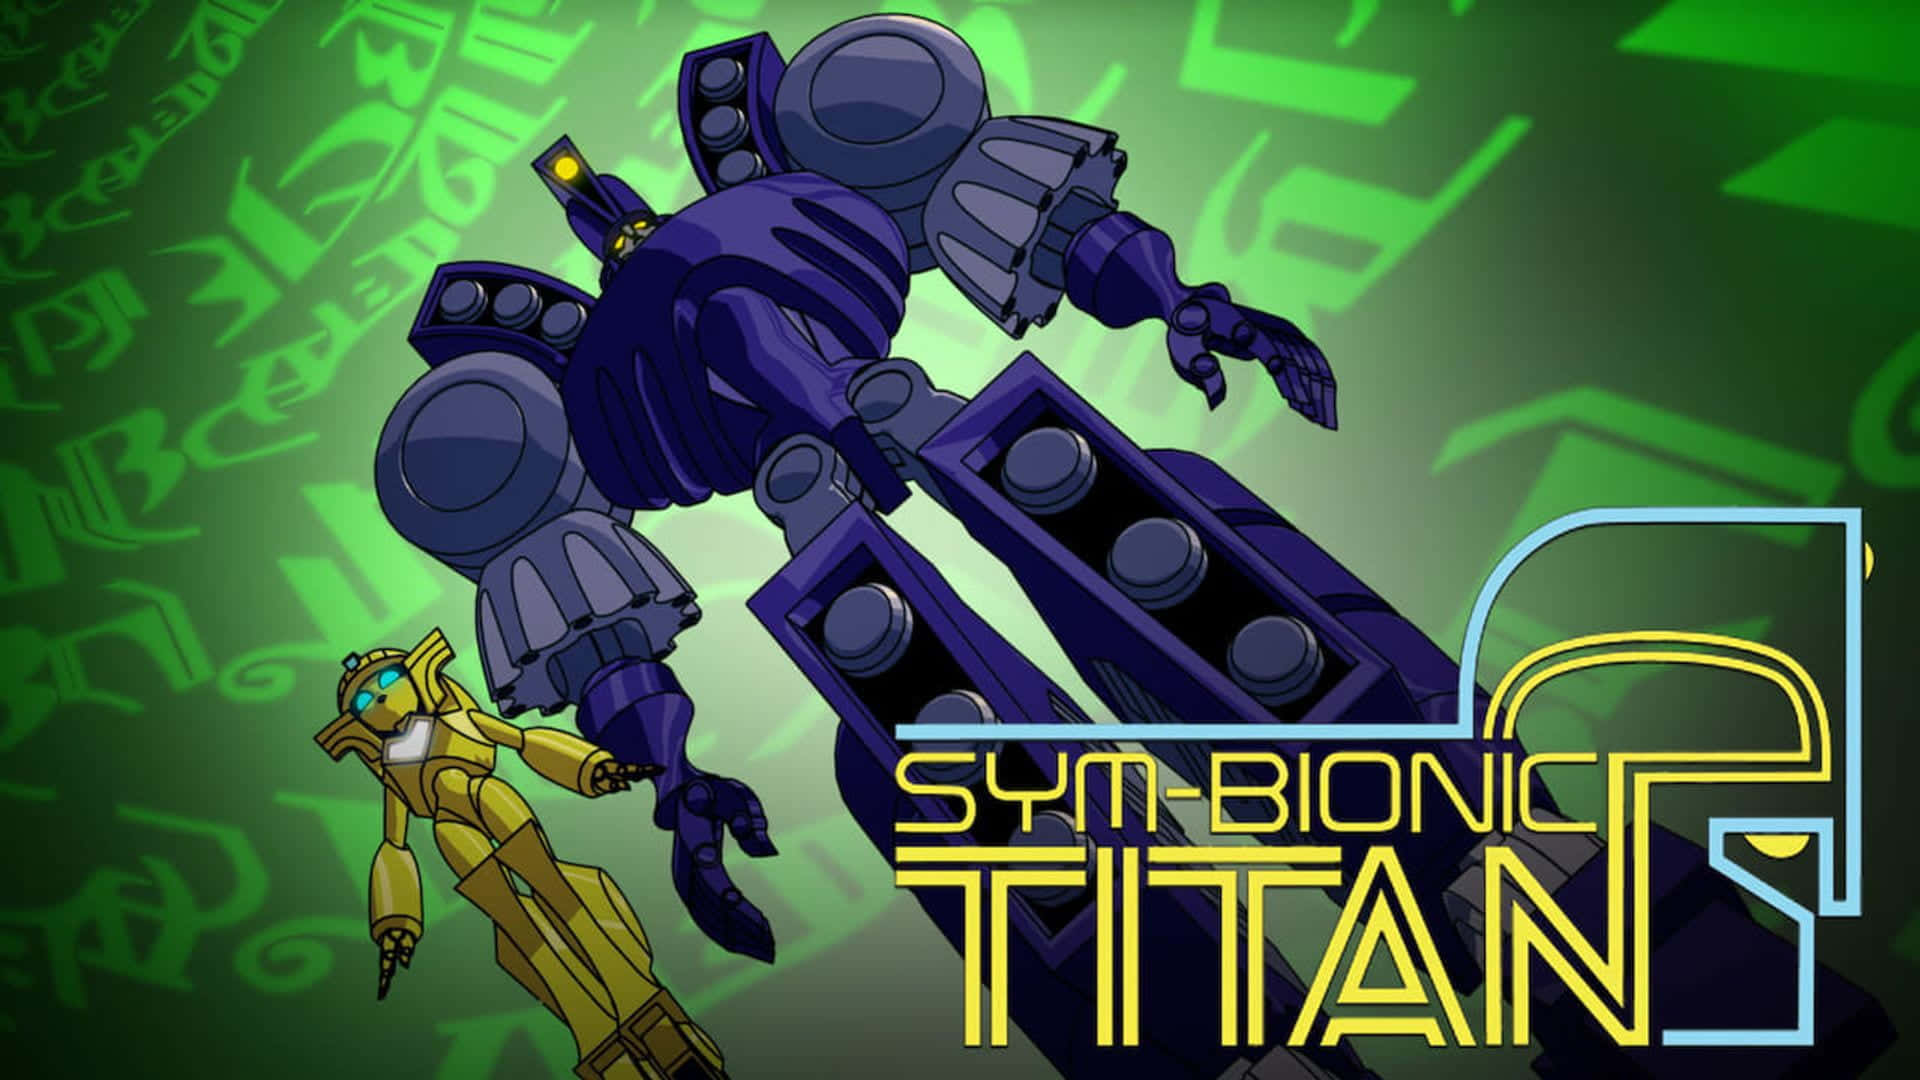 Sym Bionic Titan Charactersand Logo Wallpaper